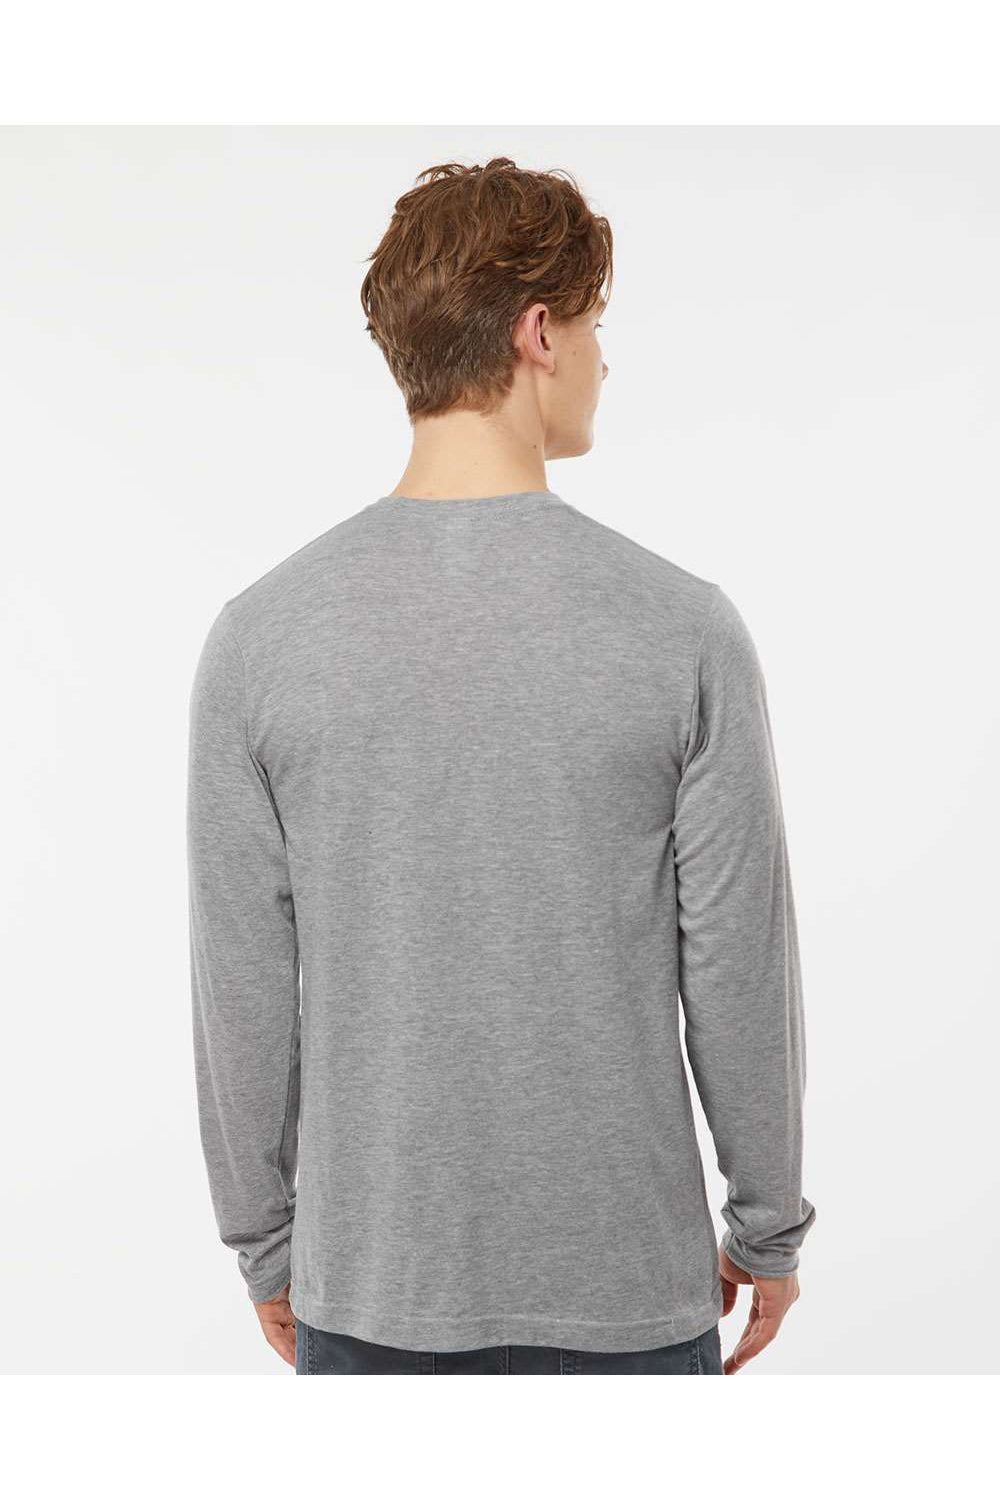 Tultex 242 Mens Poly-Rich Long Sleeve Crewneck T-Shirt Heather Grey Model Back